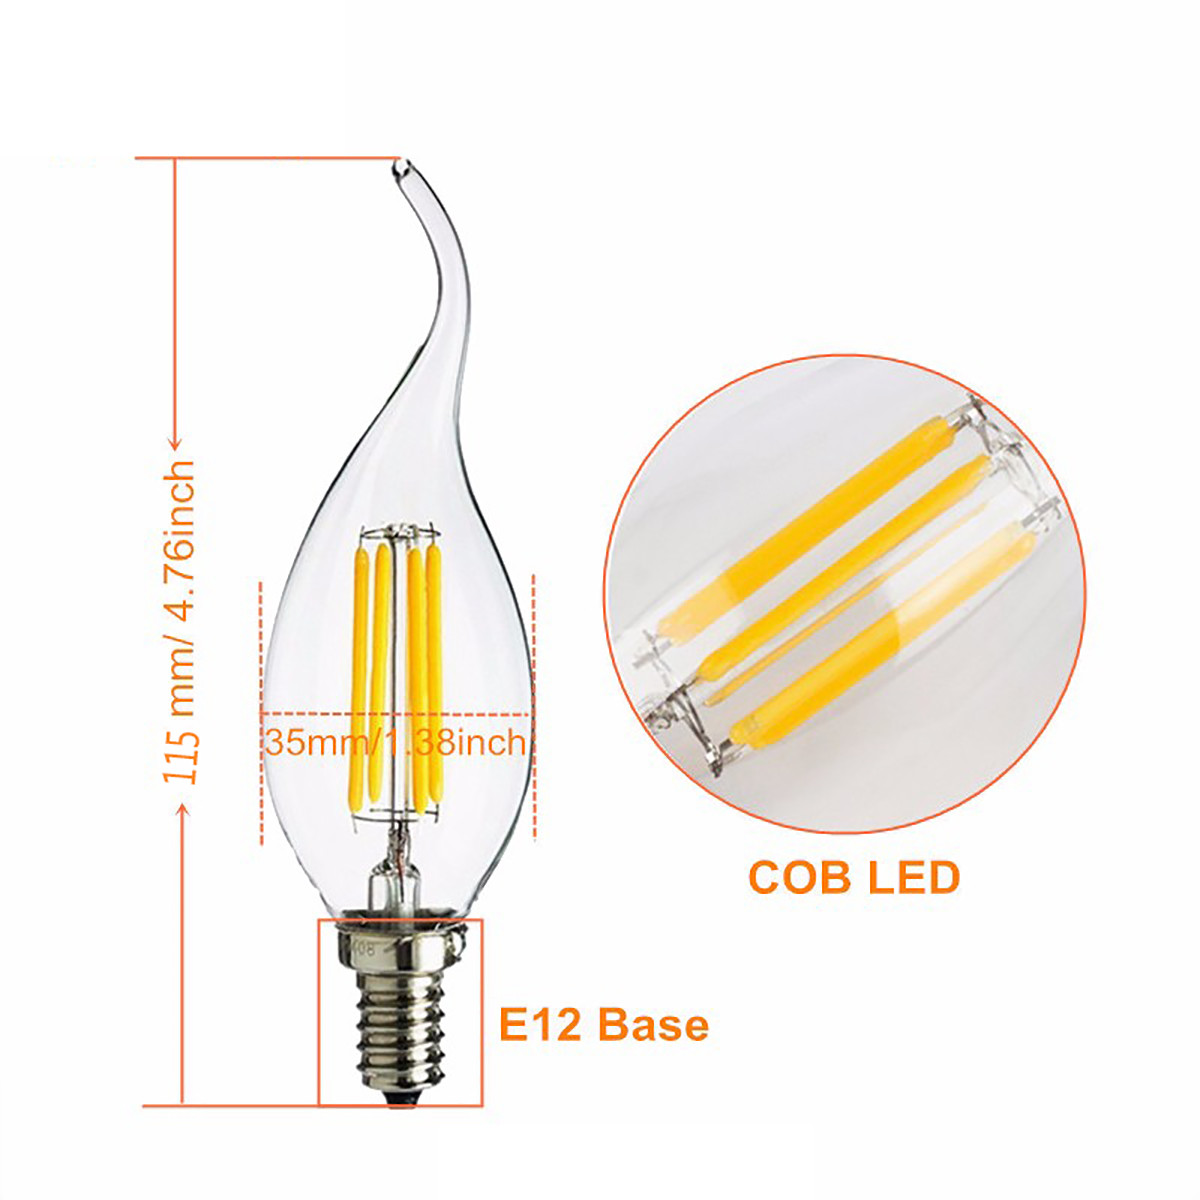 Ampoule dorée LED E14 – Oma Design